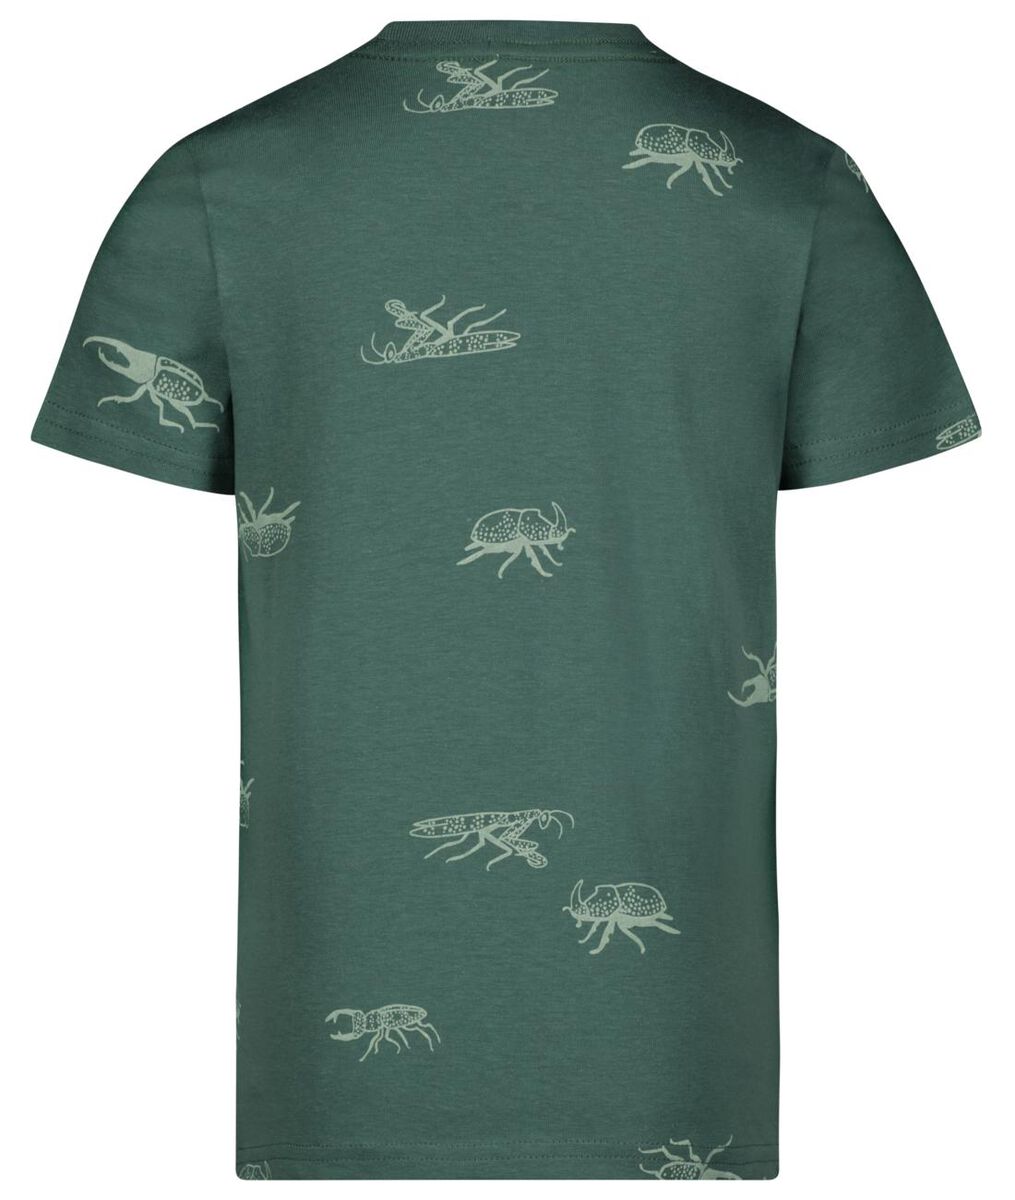 Kinder-T-Shirt, Insekten grün - 1000026901 - HEMA